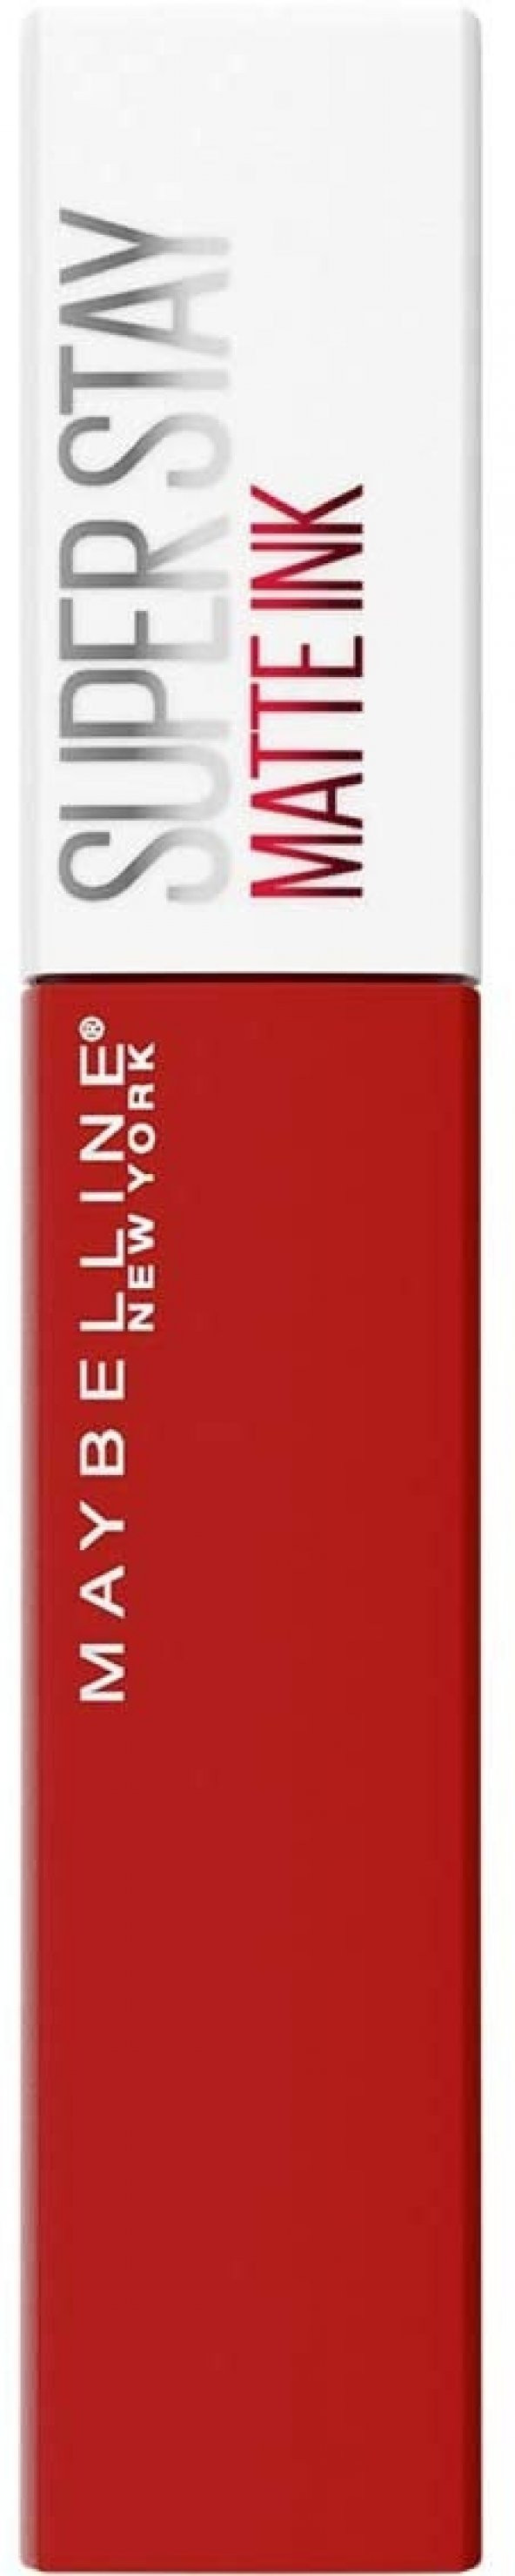 Maybelline New York Super Stay Matte Ink Likit Mat Ruj - 330 Innovator- Kırmızı 1 Paket (1 x 5.1 ml)